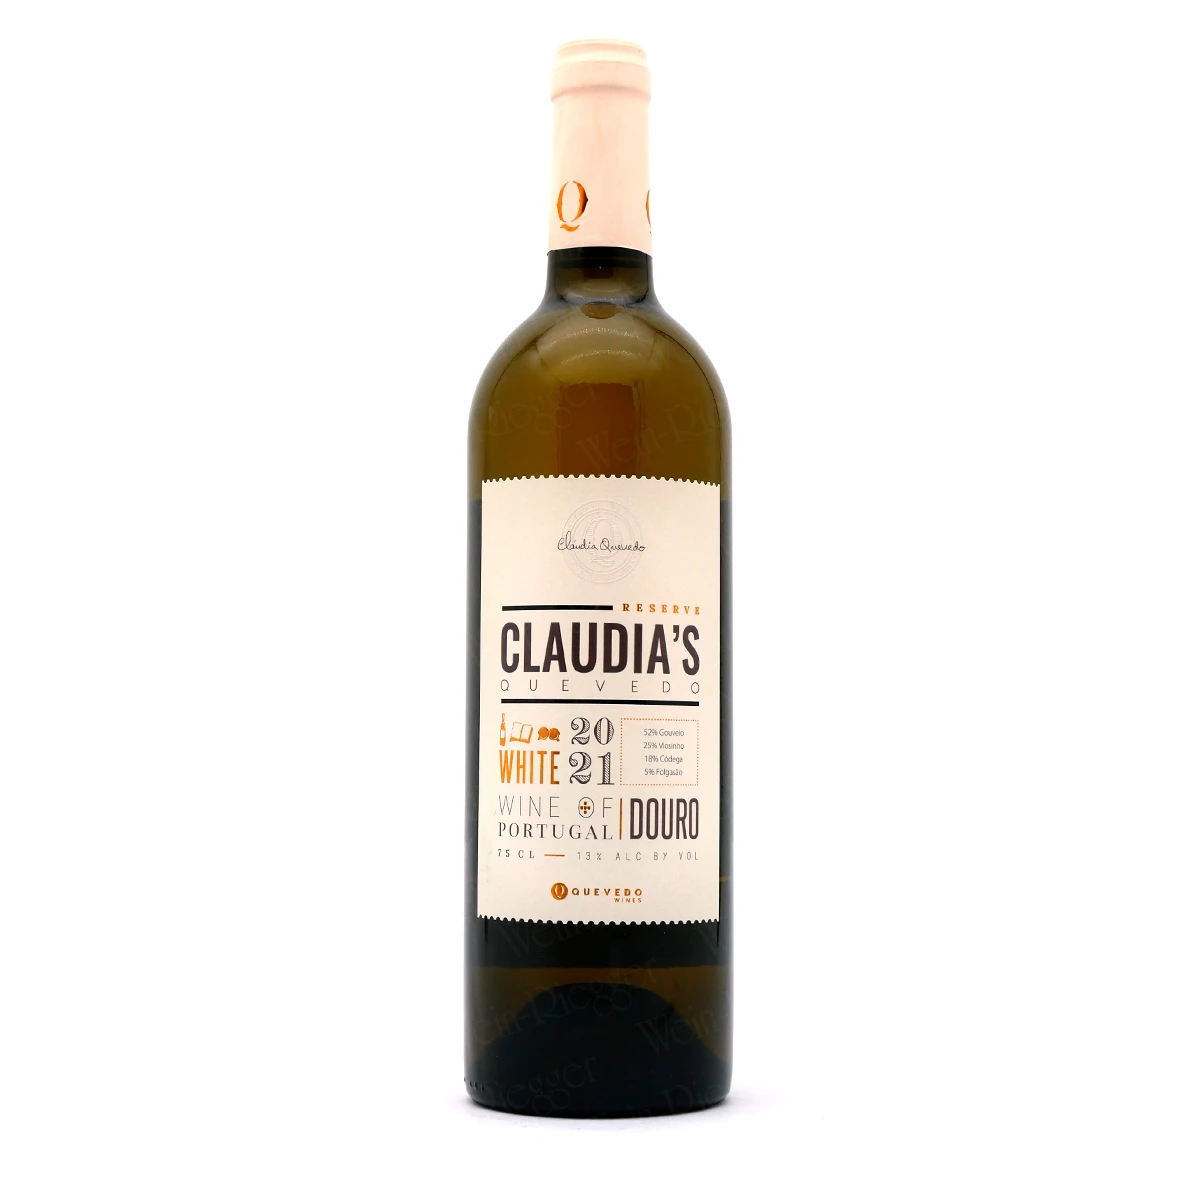 Claudia's Reserve WHITE DOC Douro - Quevedo